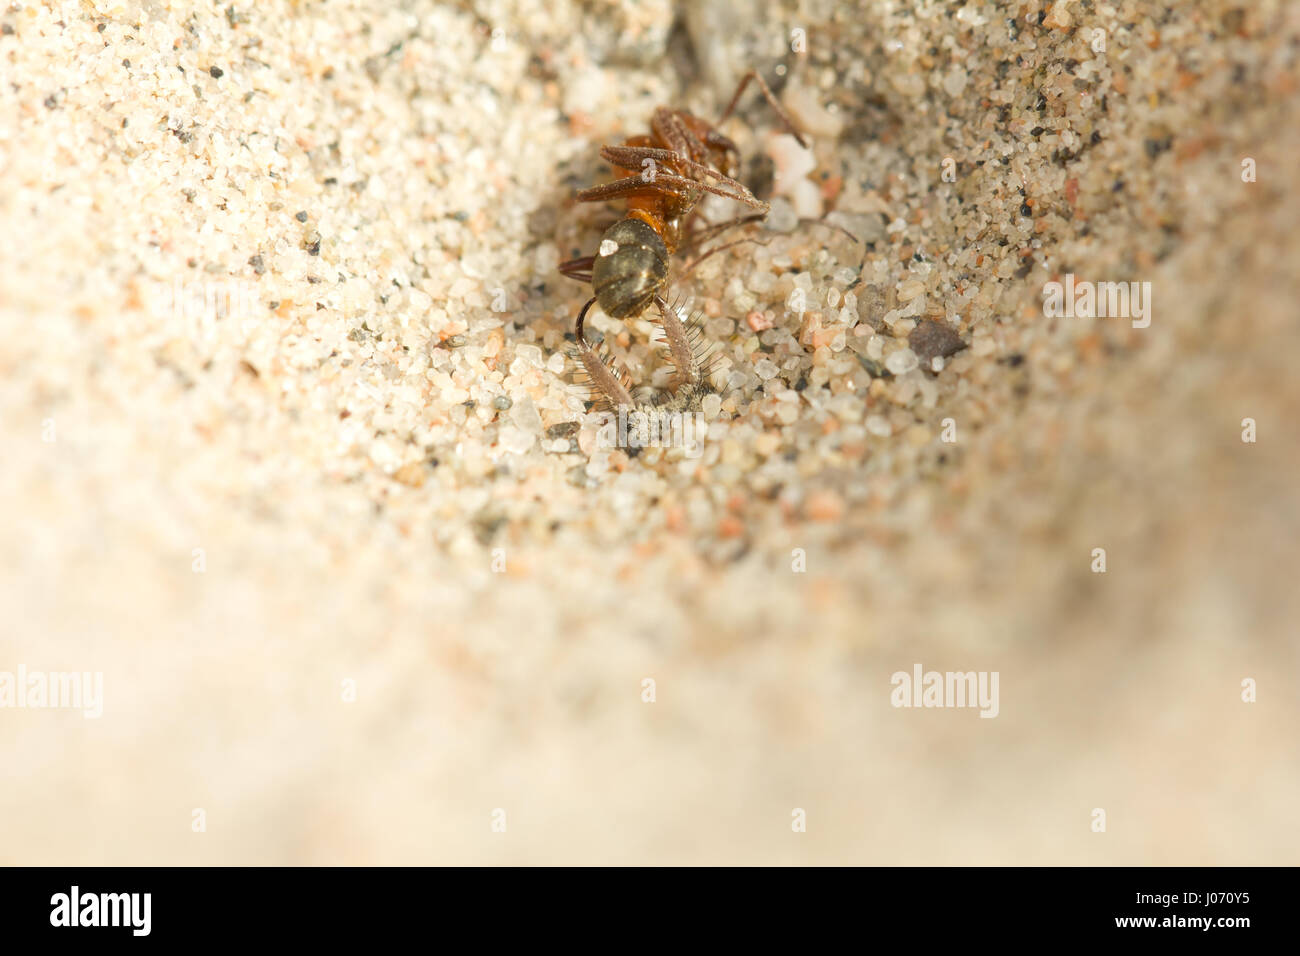 Ant-lion Stock Photo